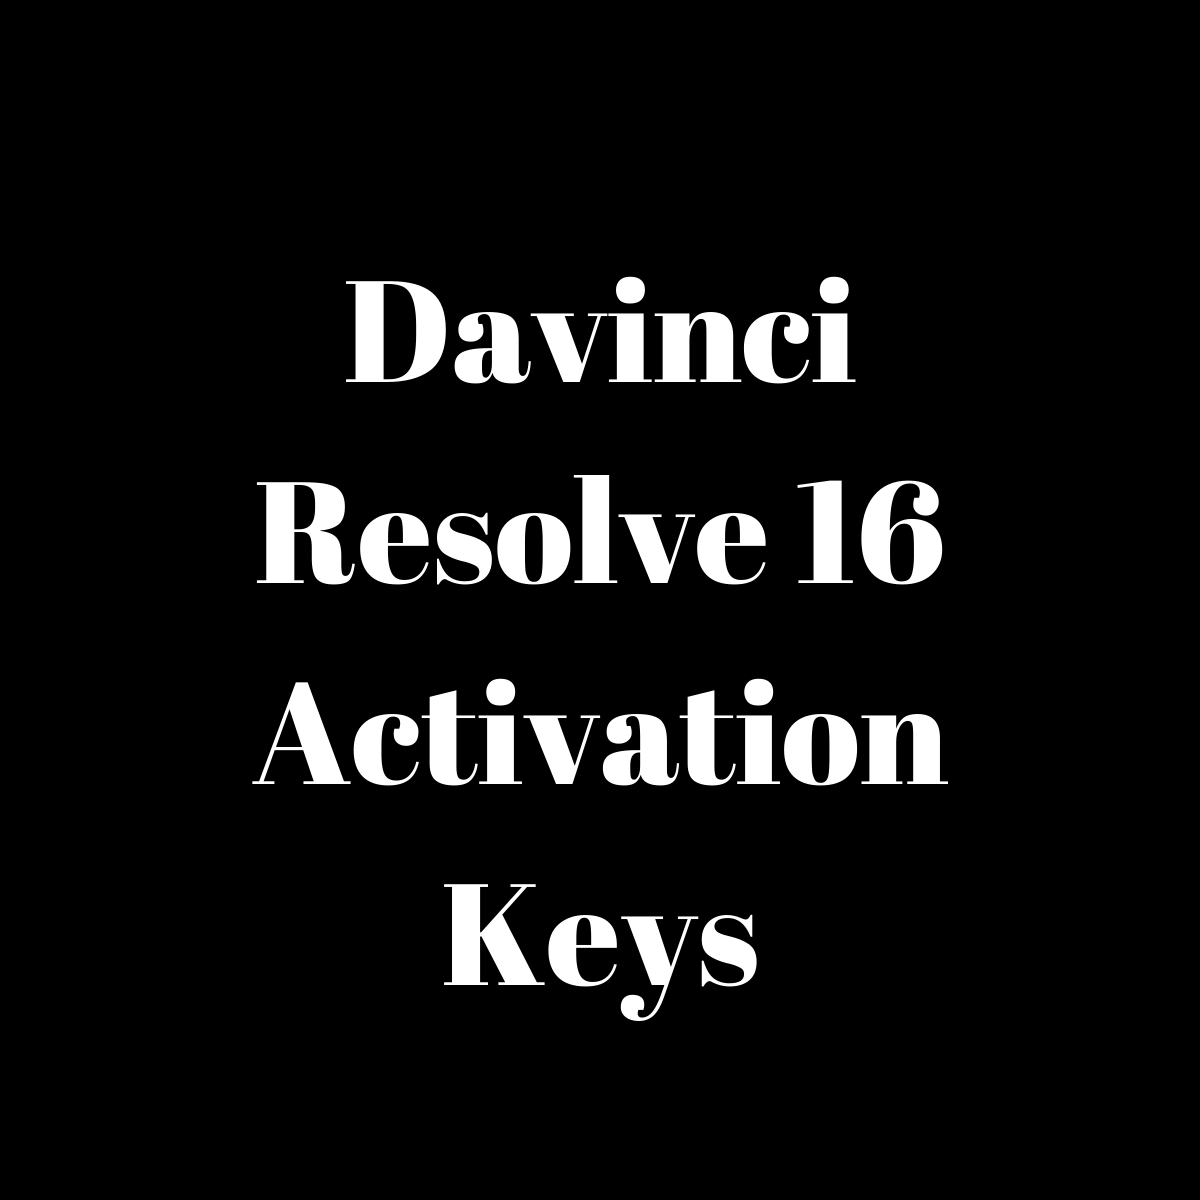 Davinci resolve activation keys